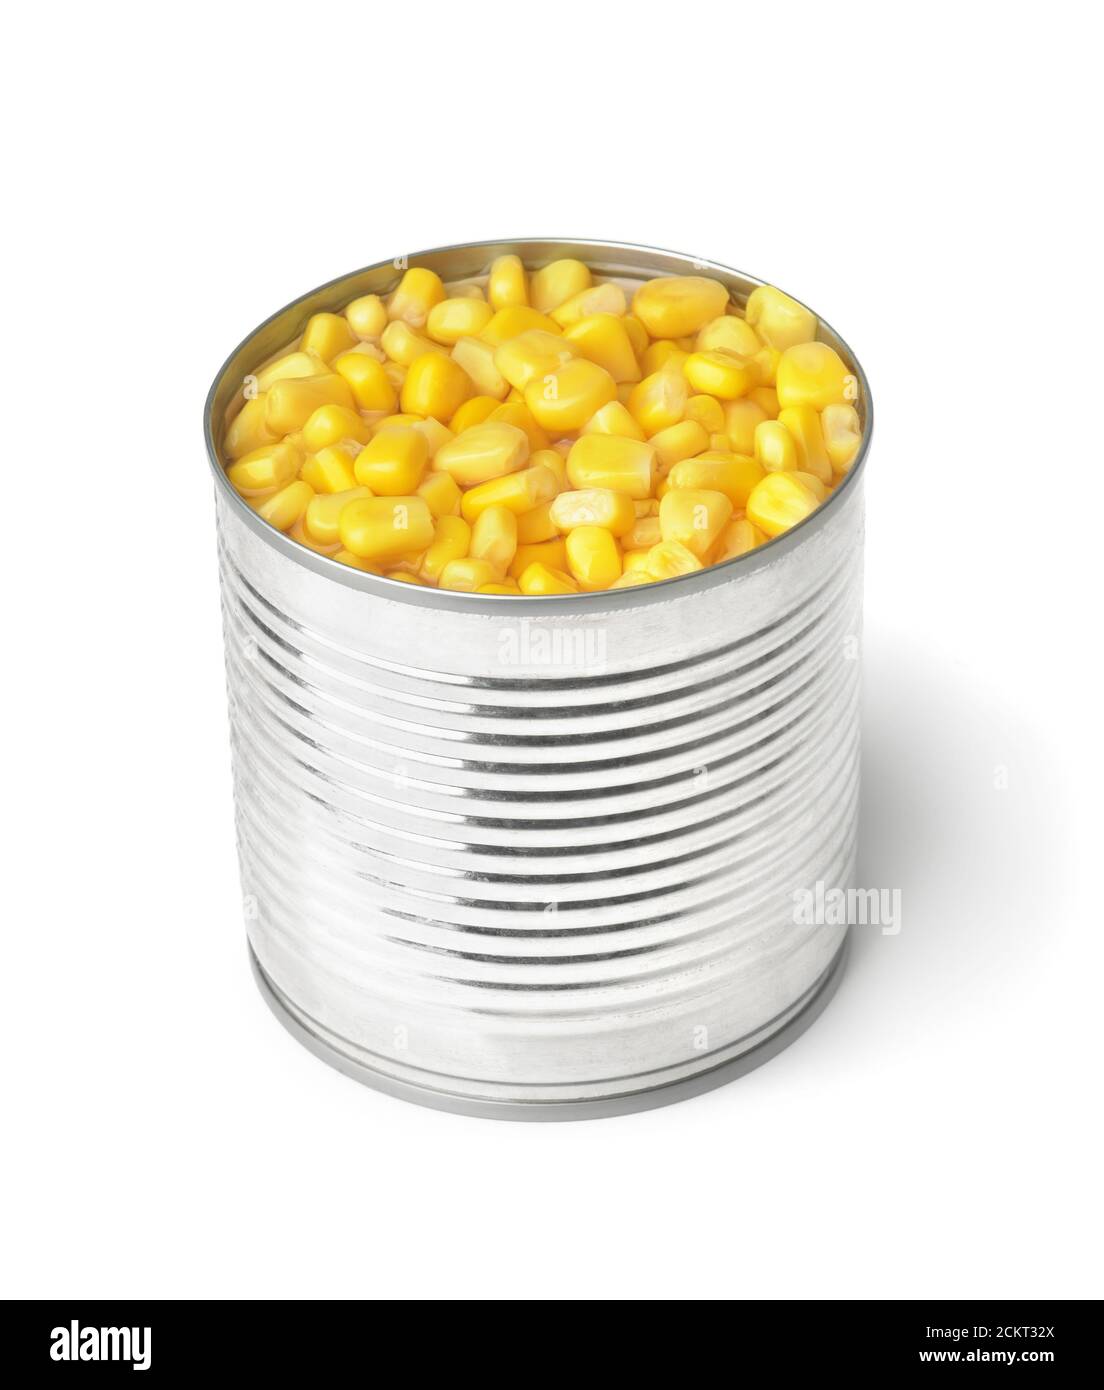 Lata de estaño abierta con maíz dulce aislado en blanco Foto de stock